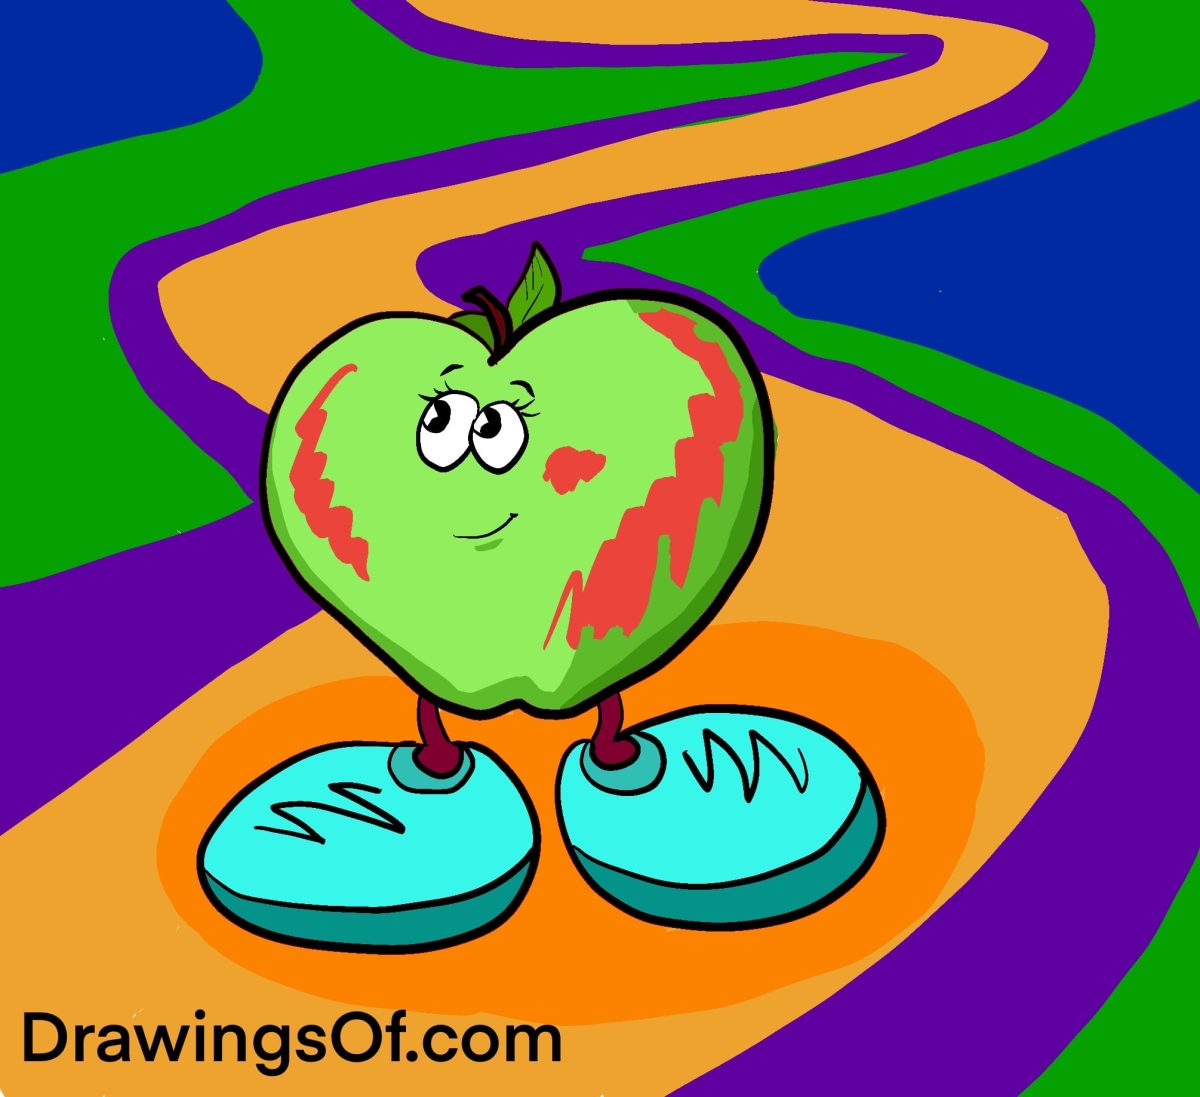 Apple cartoon walking on path